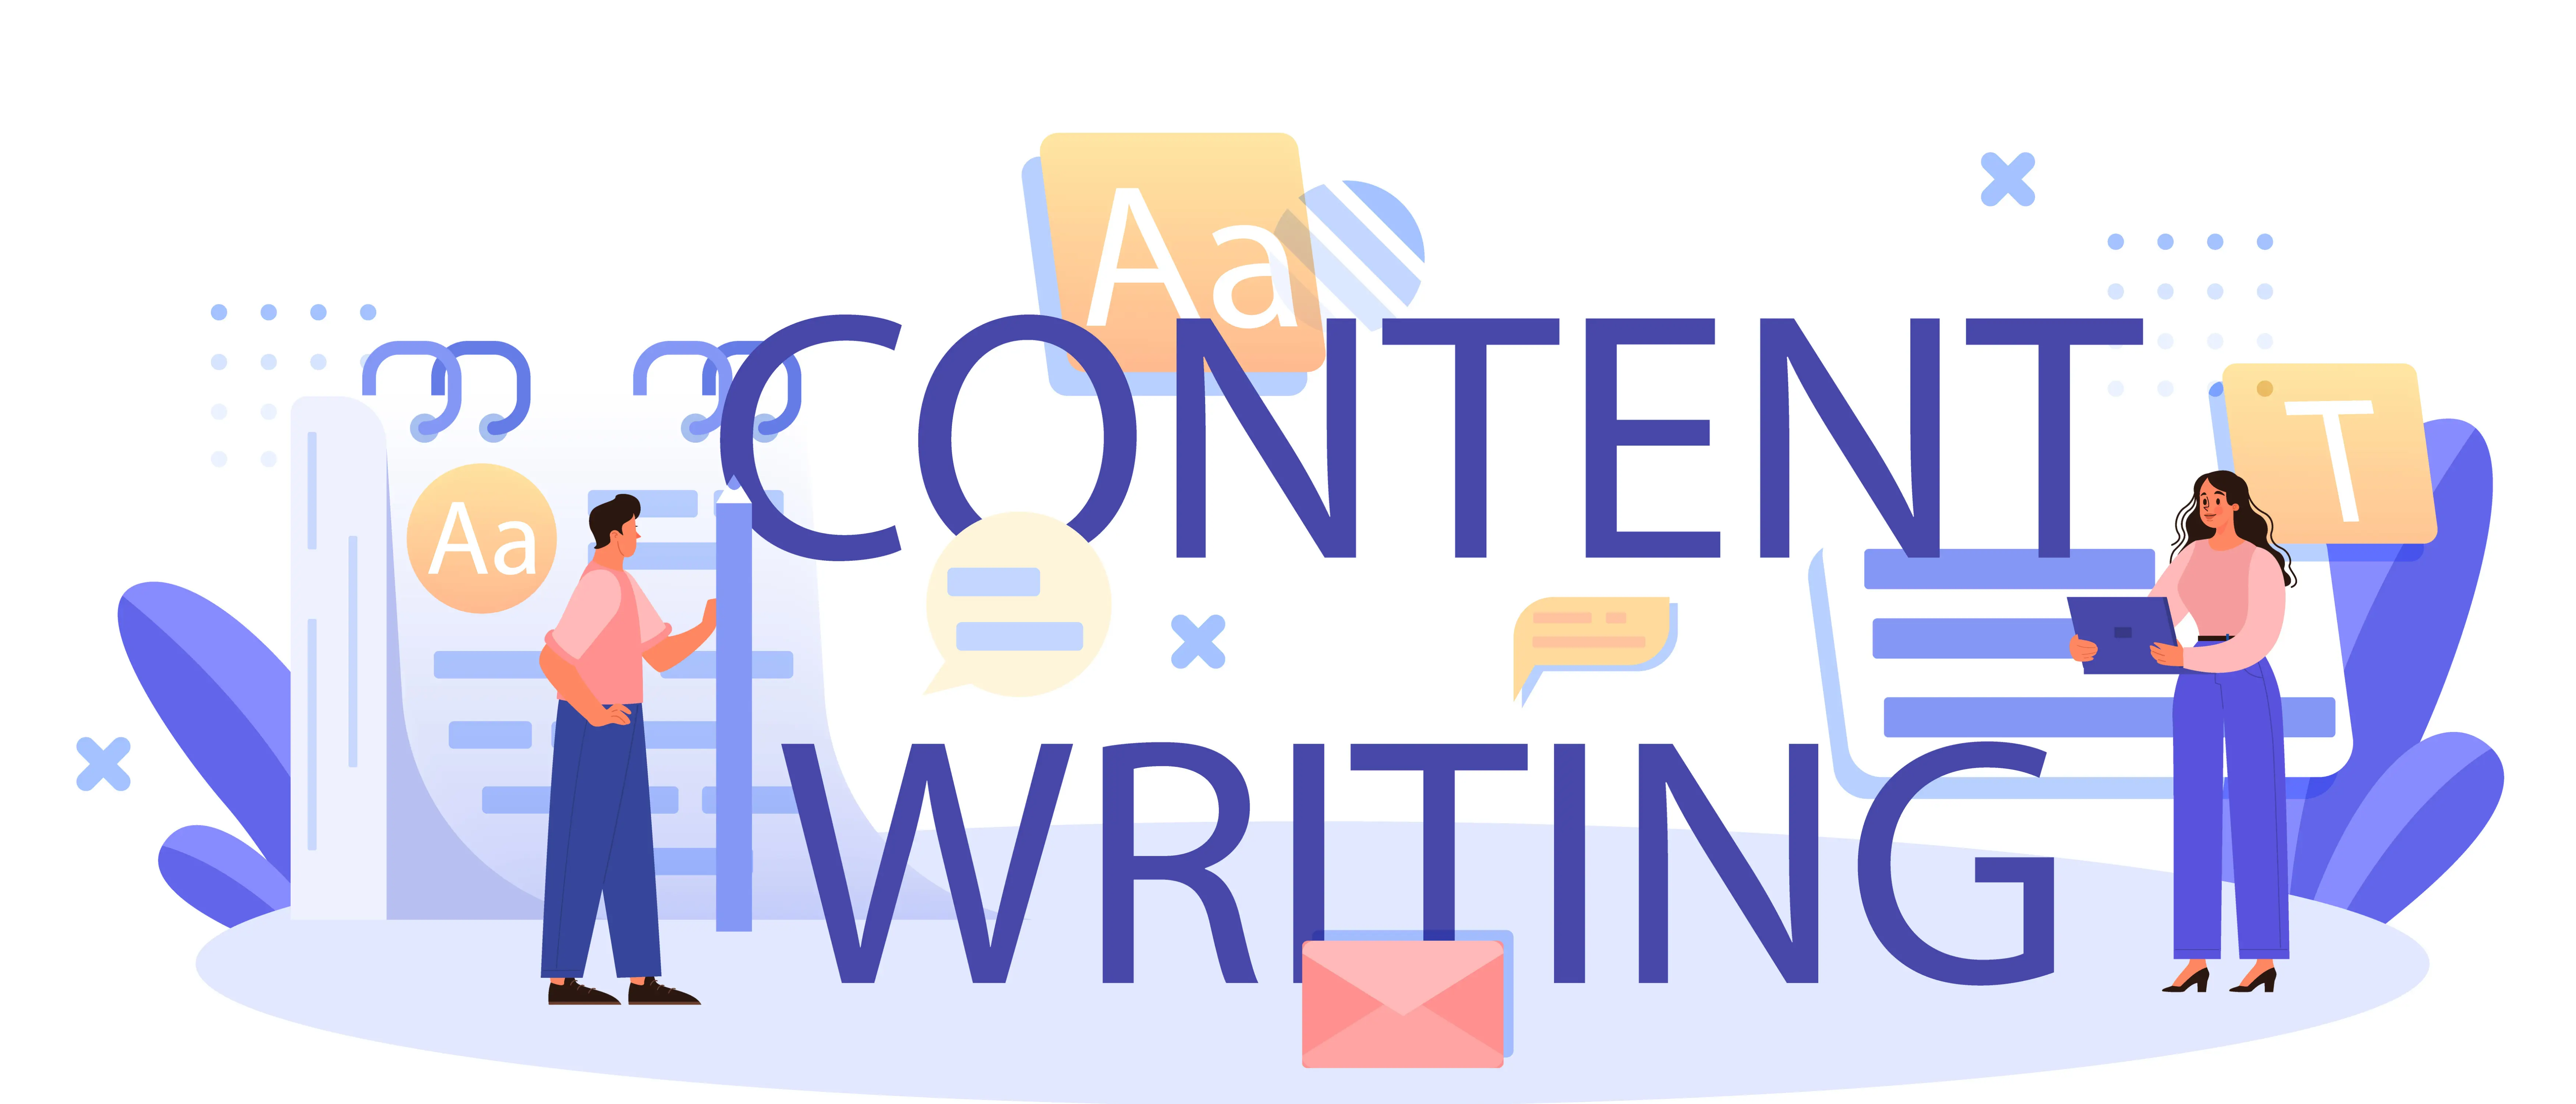 ContentWriting-banner